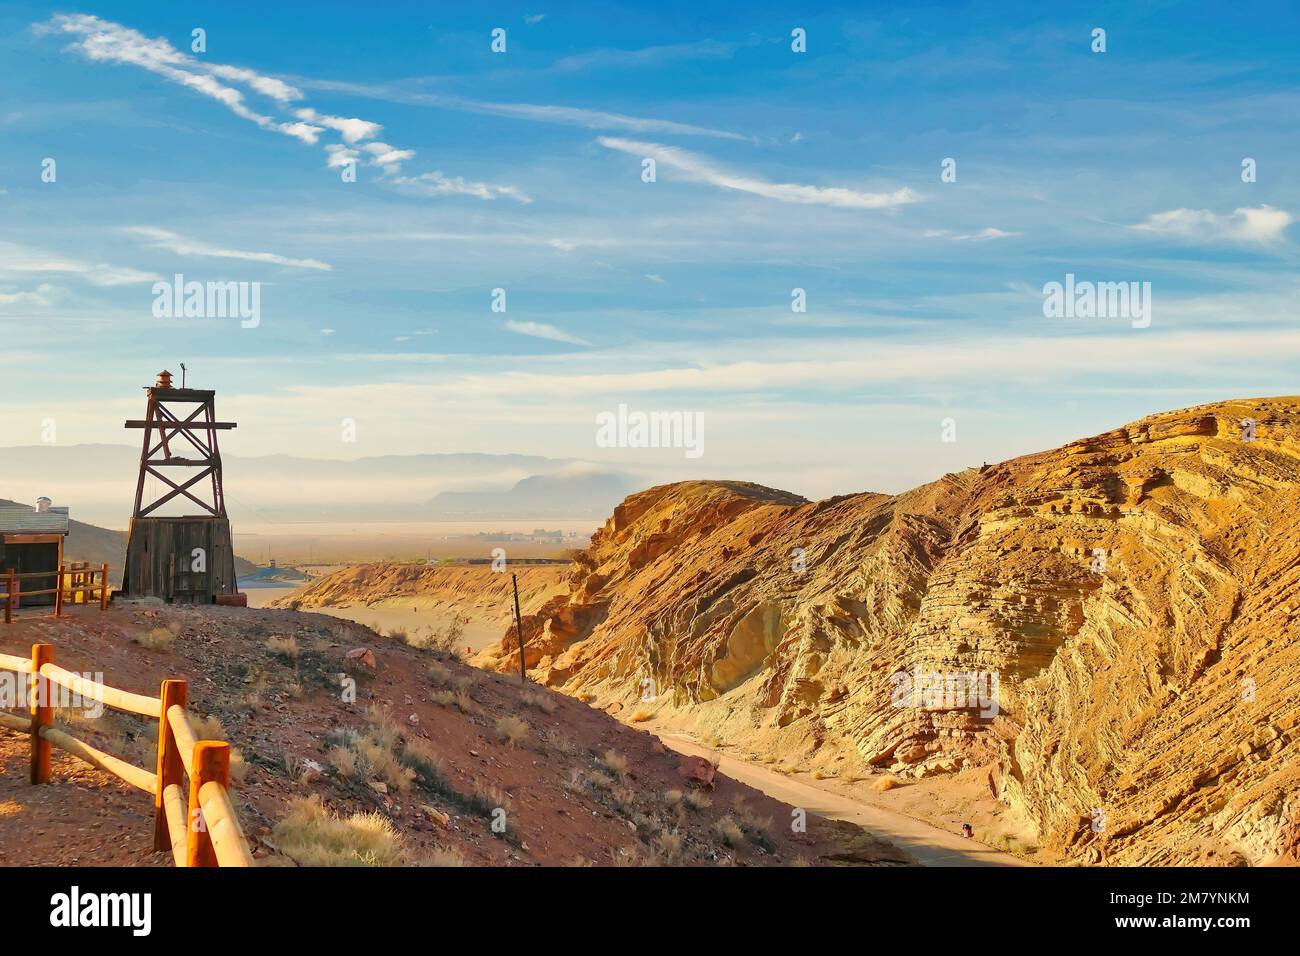 Die Straße führt in die ehemalige Silberberbergbaustadt Calico in der Mojave-Wüste, Kalifornien, USA Stockfoto